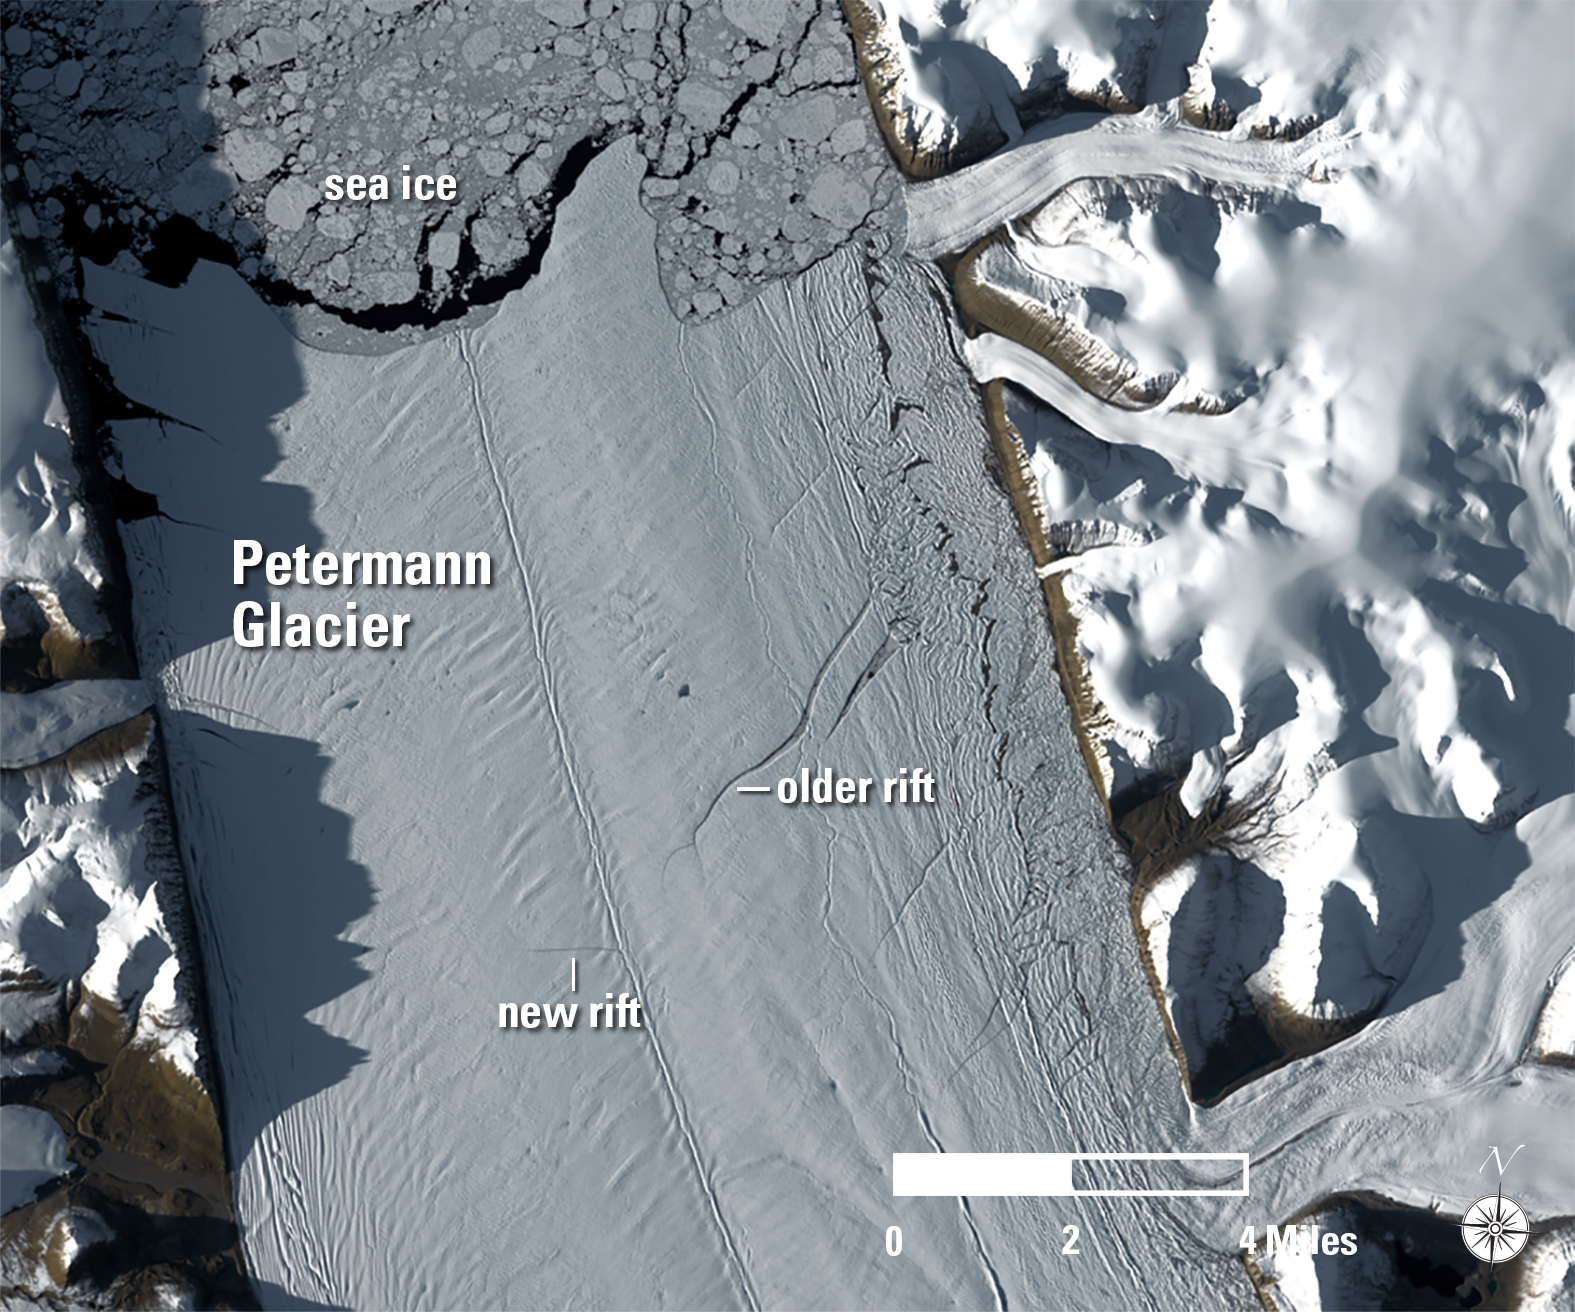 Aug. 30, 2017, Landsat 8 (path/row 55/244) — 2017 rift, Petermann Glacier, Greenland 6:17:40 p.m. local time in Greenland